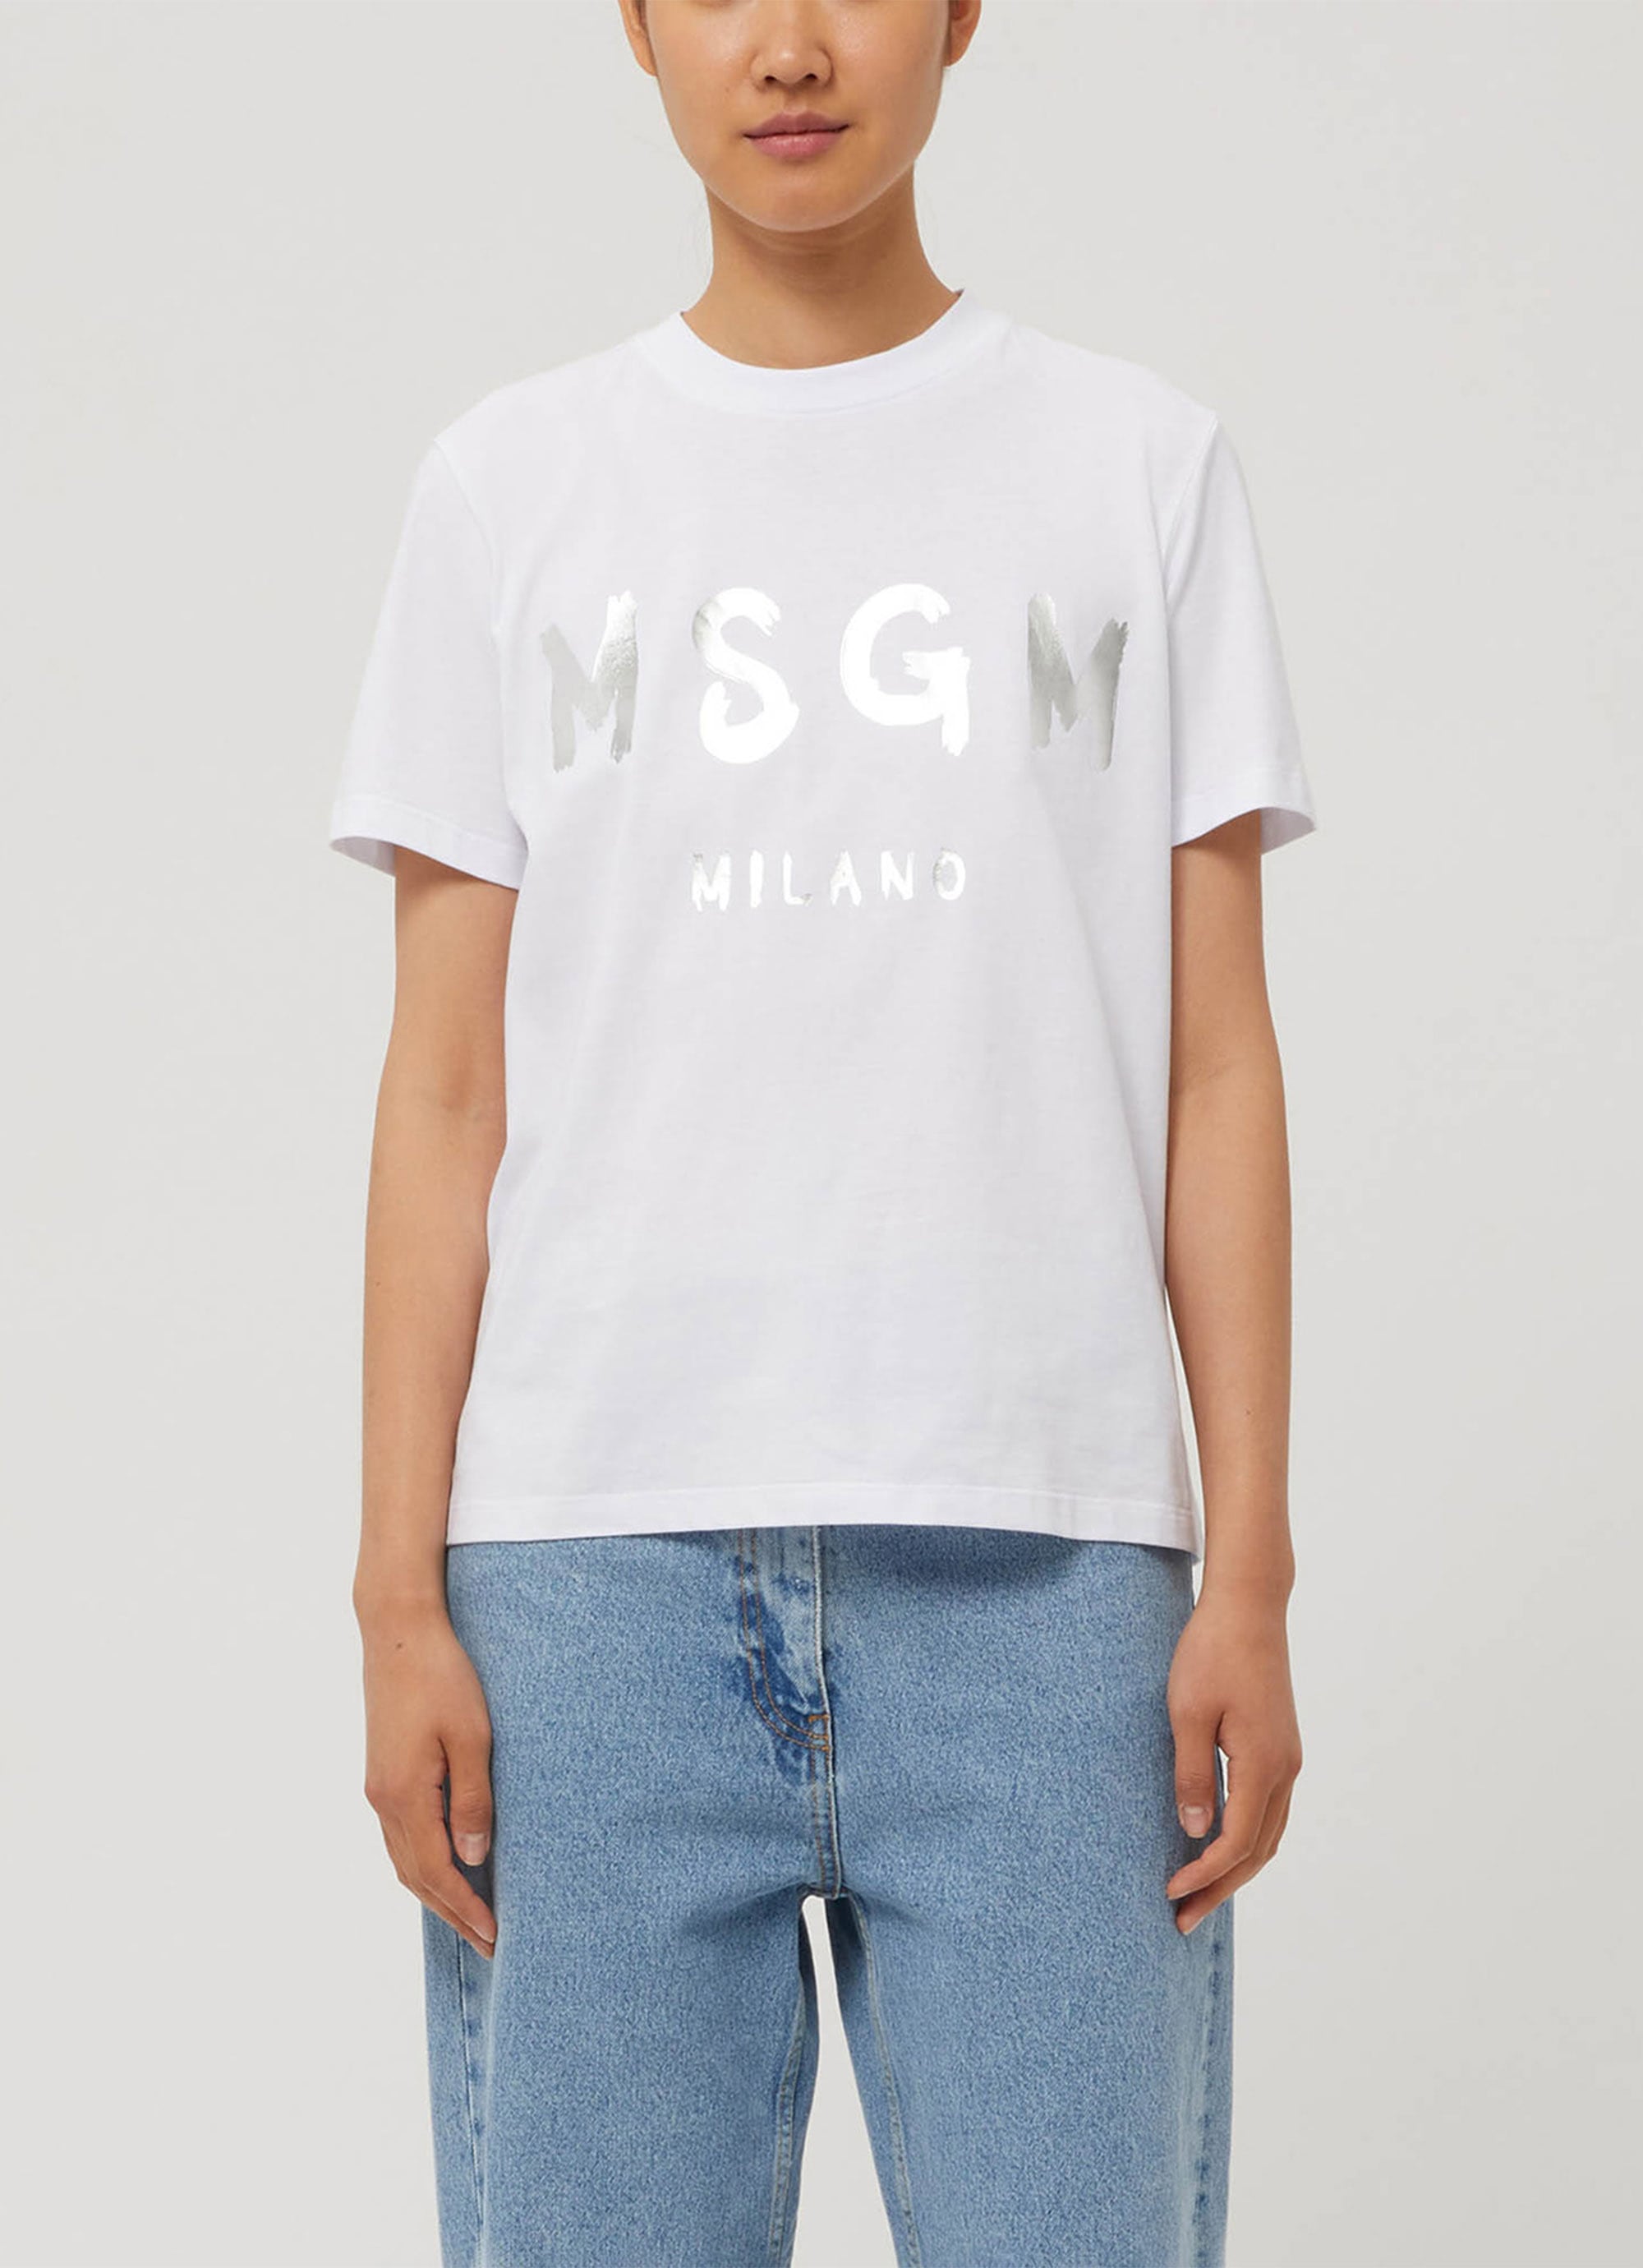 MSGM ブラッシュロゴTシャツ【FOIL PRINT】 詳細画像 ホワイト×シルバー 2